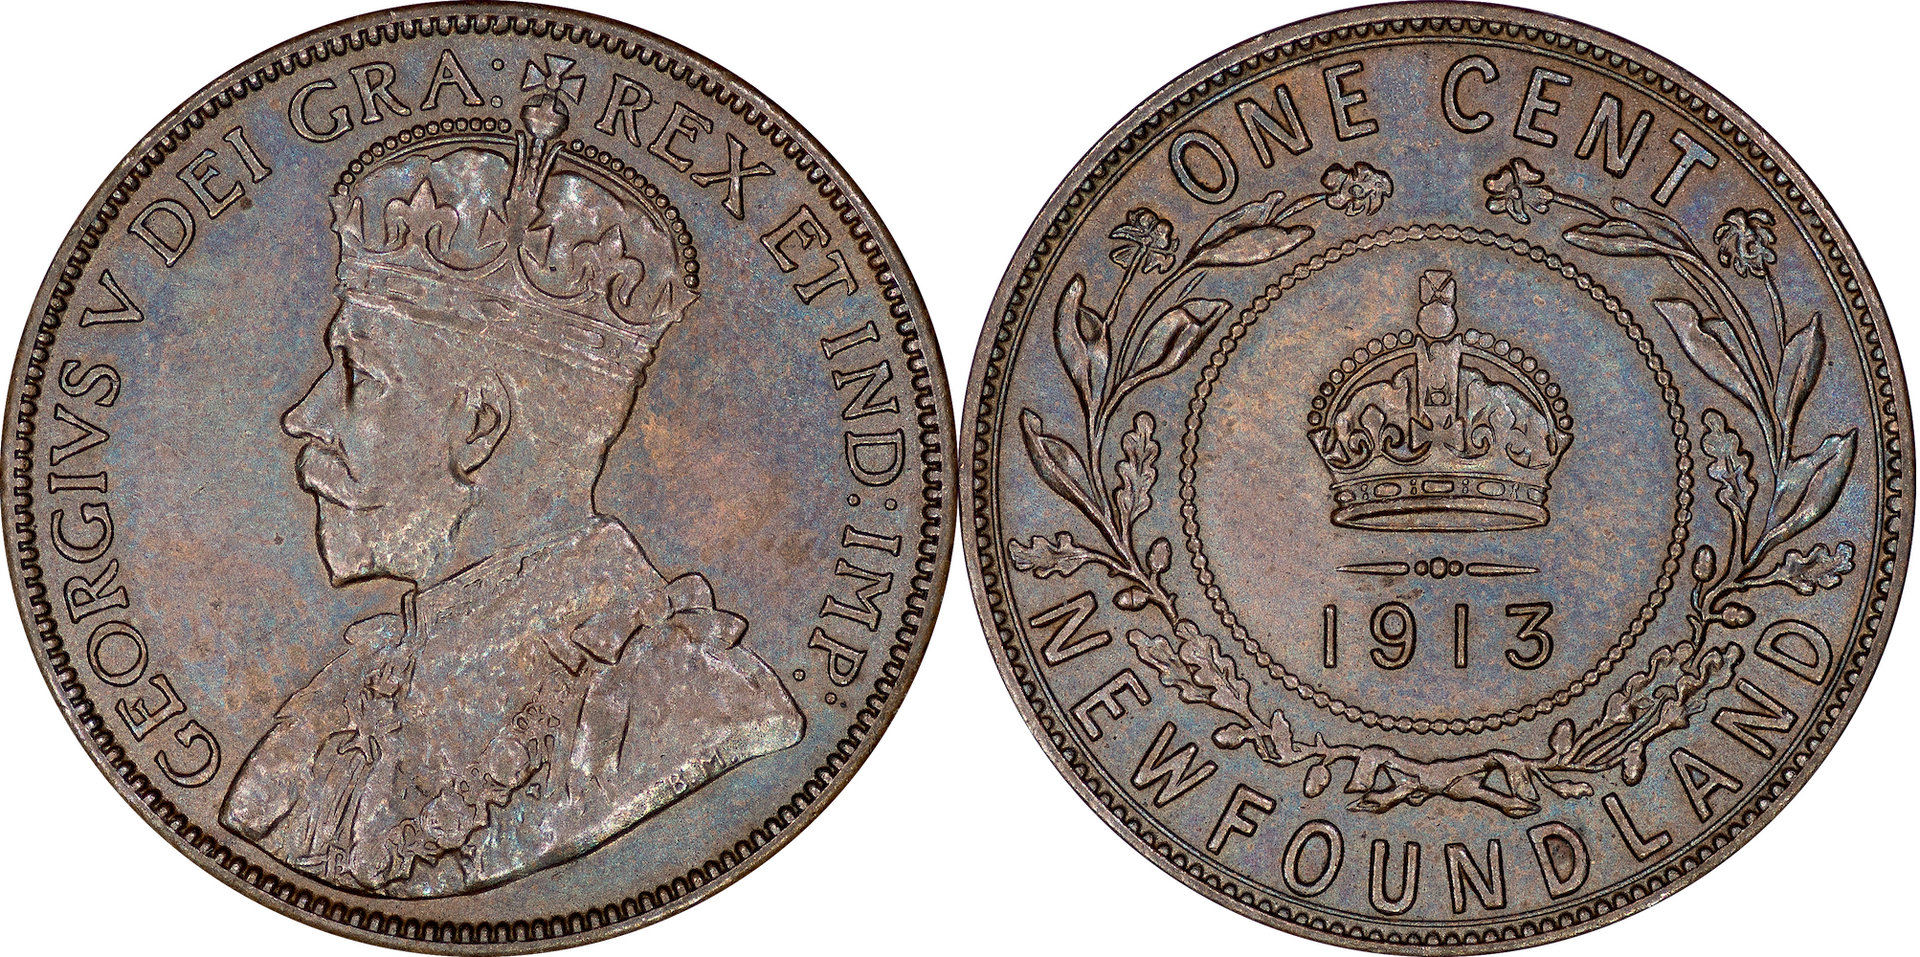 Canada (Newfoundland) - 1913 1 Cent.jpg